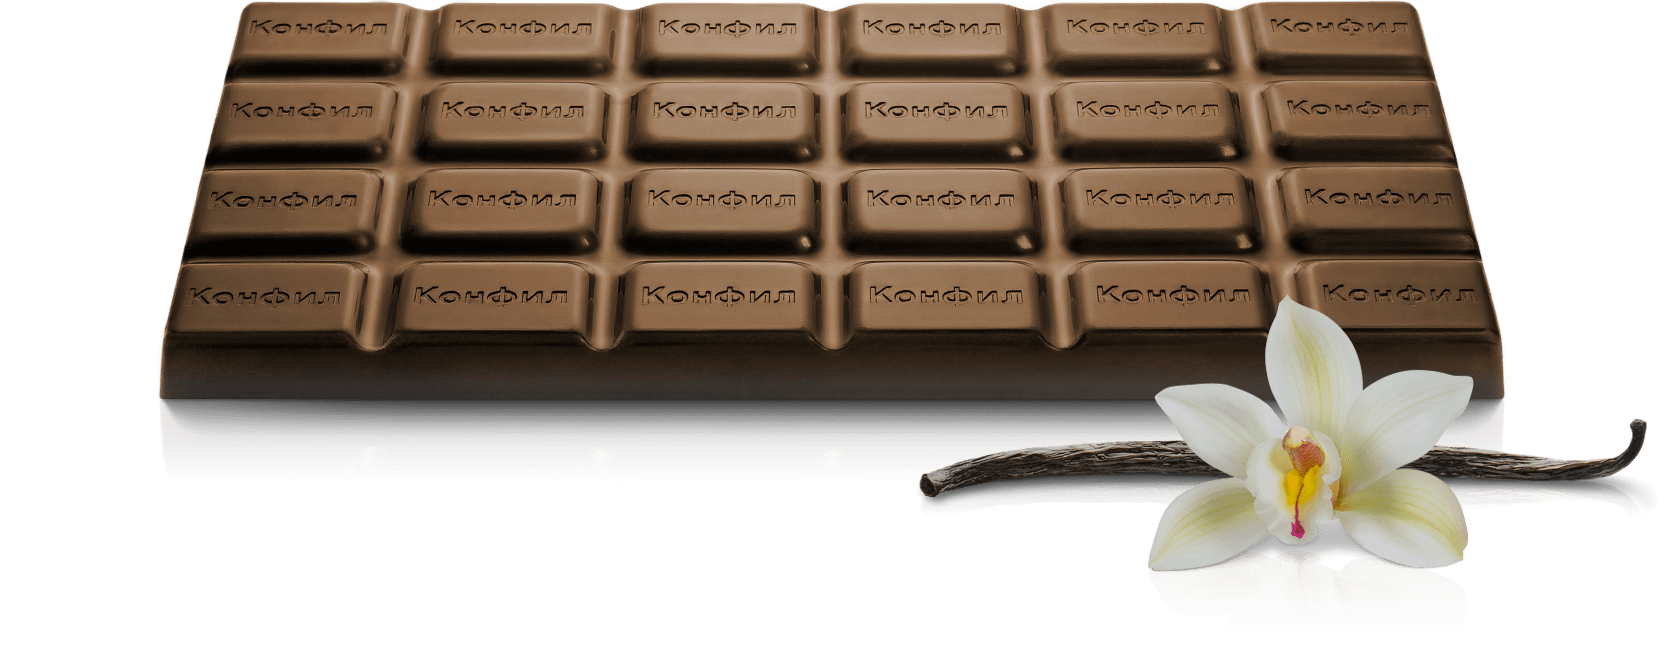 1 5 плитки шоколада. Плитка шоколада. Шоколадная плитка. Плиточный шоколад. Шоколадные плитки с логотипом.